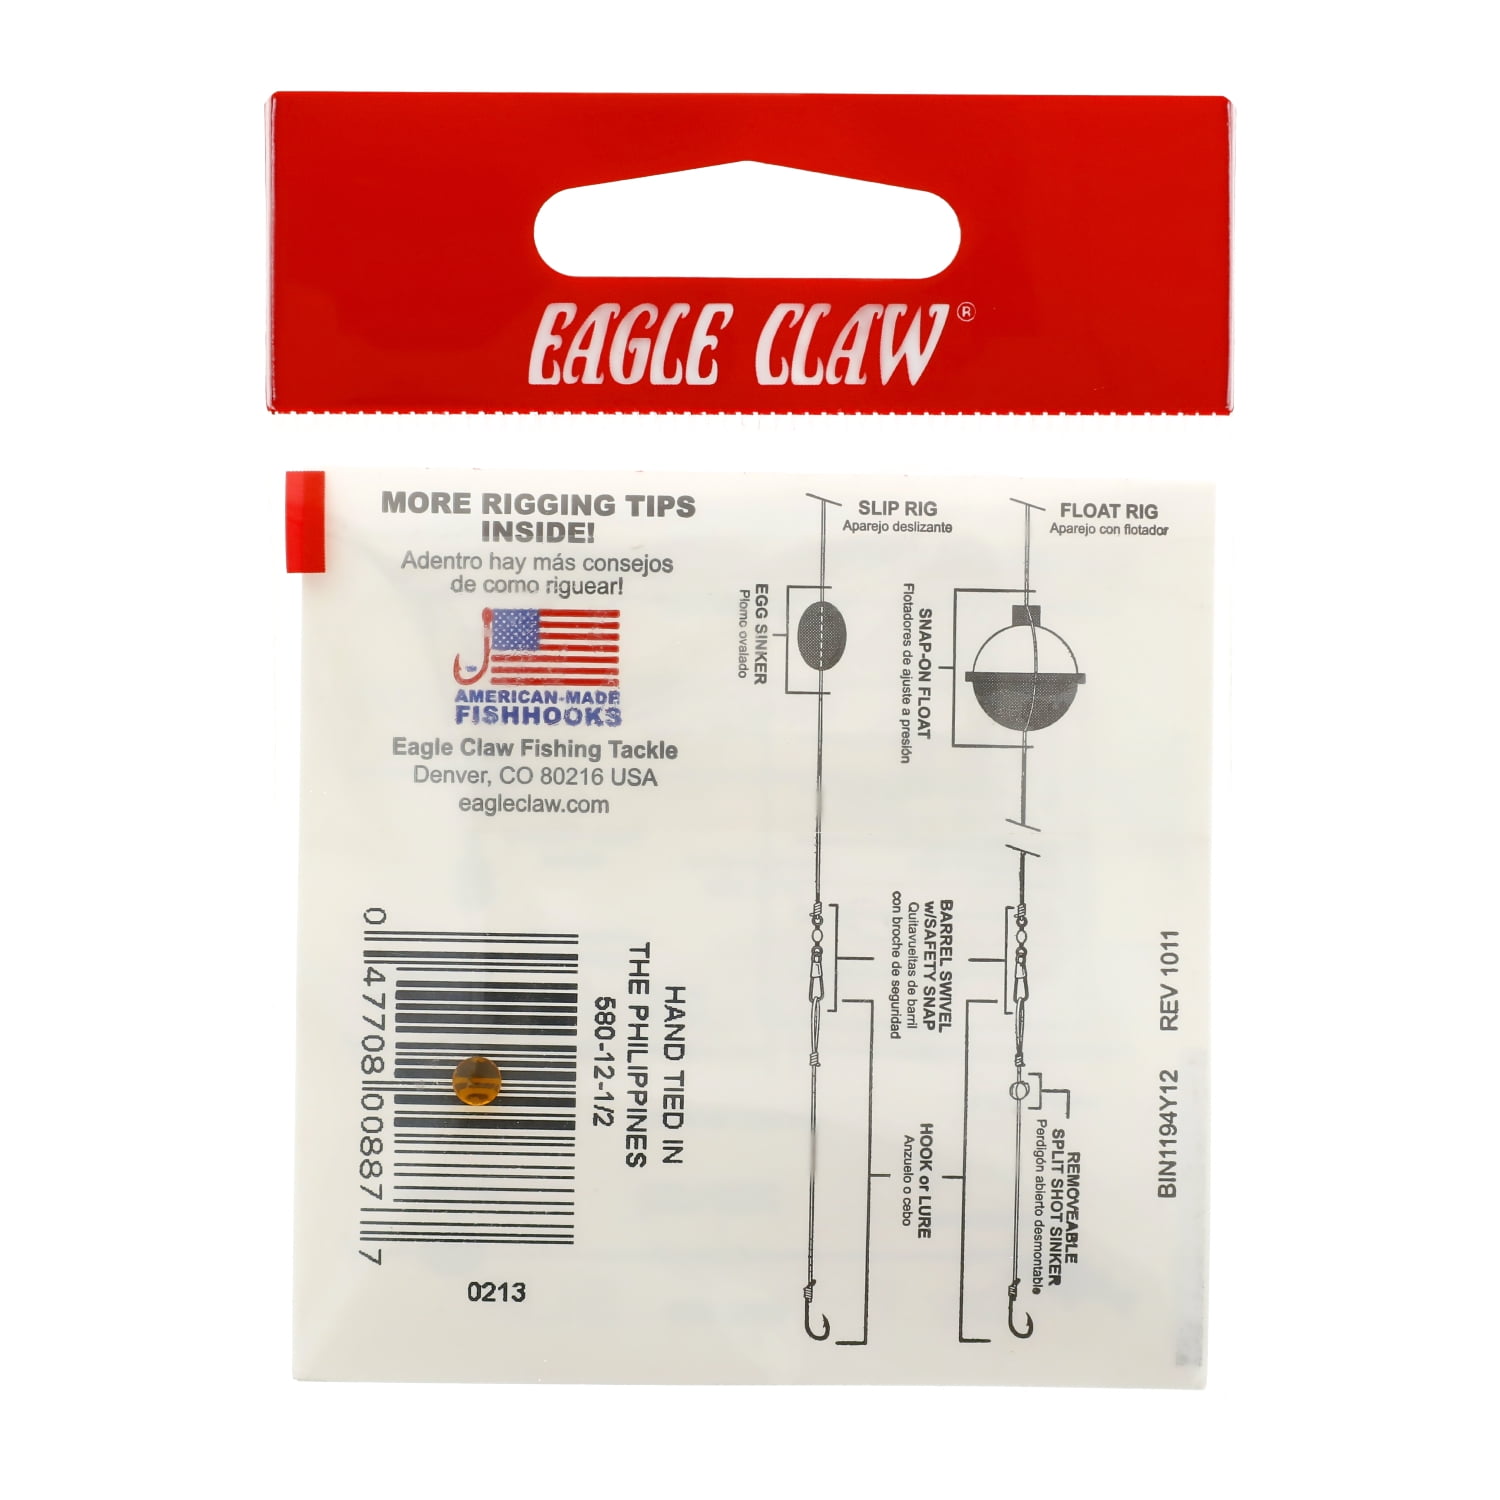 Eagle Claw 181FH-10 Baitholder Down Eye 2-Slice Offset Hook, Bronze, Size 10